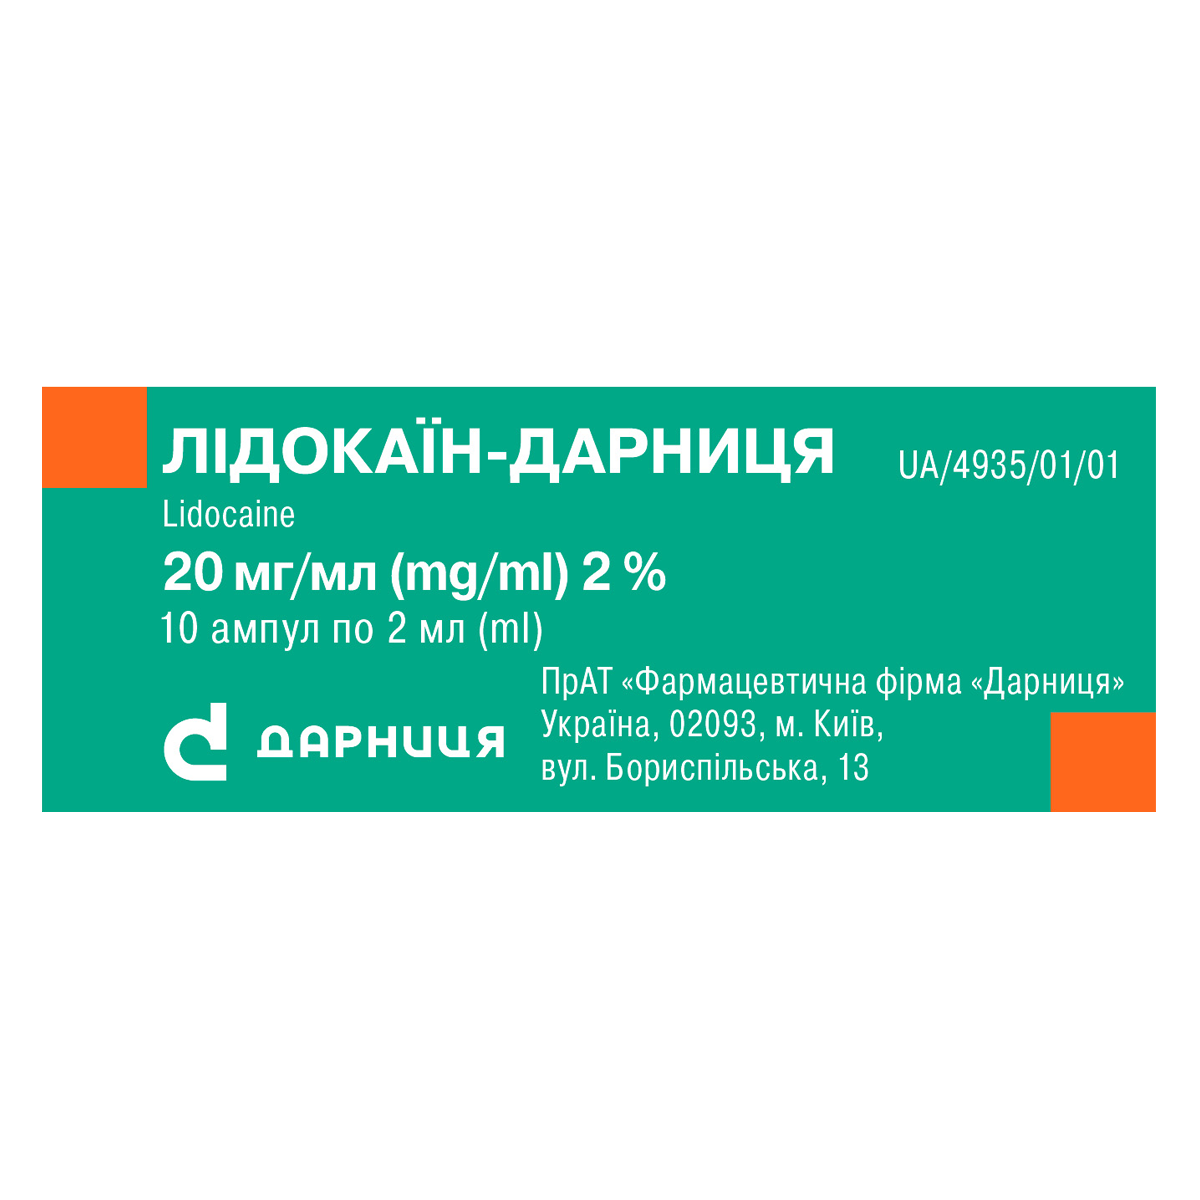 Лідокаїн-Дарниця фармацевтична компанія «Дарниця»